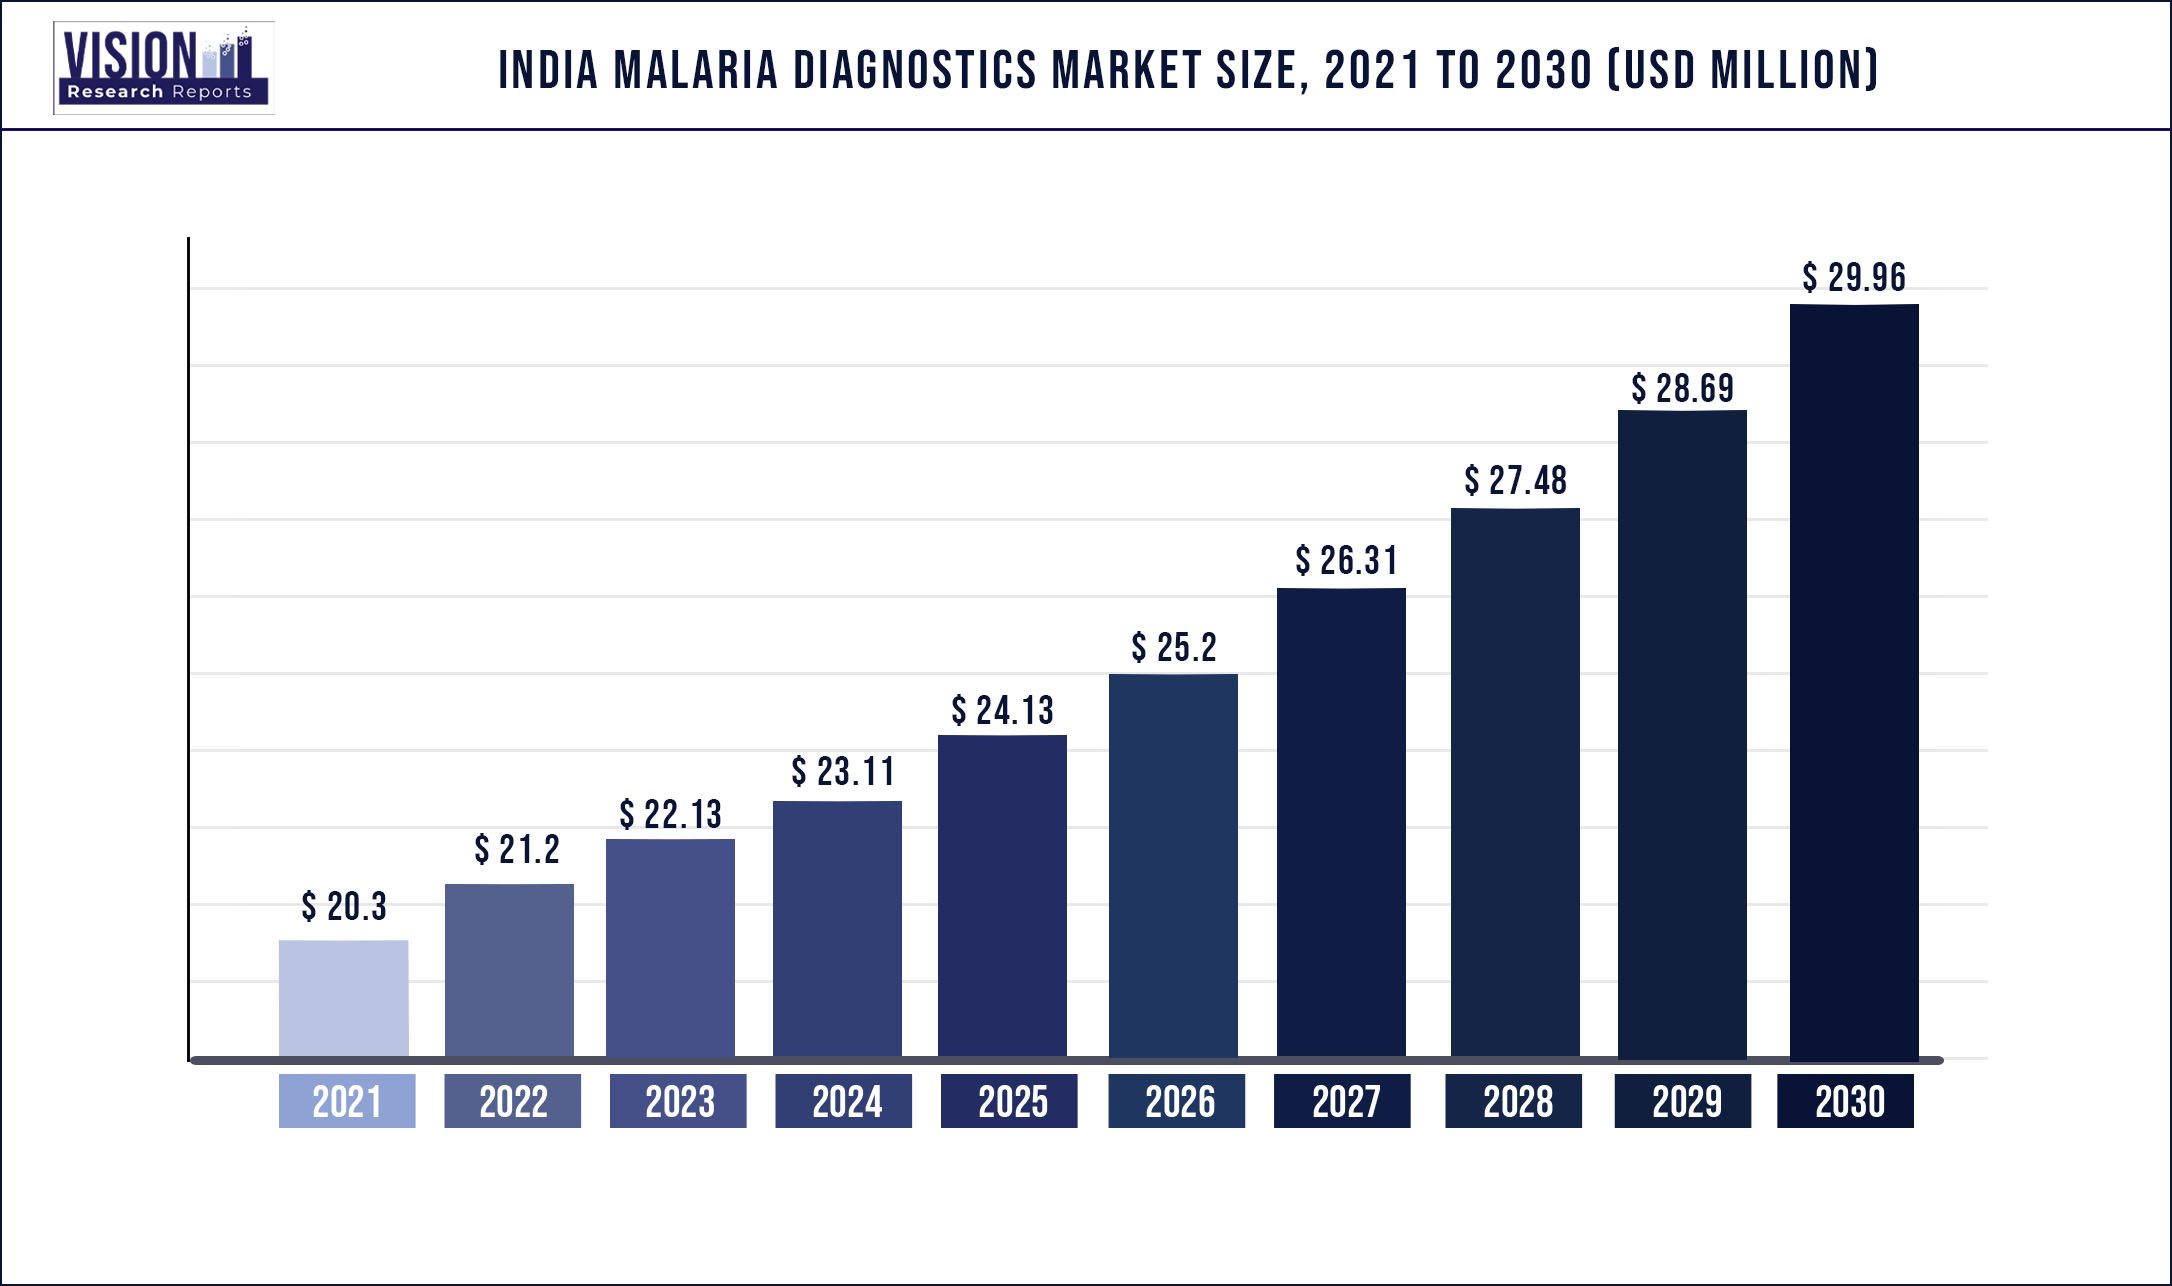 India Malaria Diagnostics Market Size 2021 to 2030